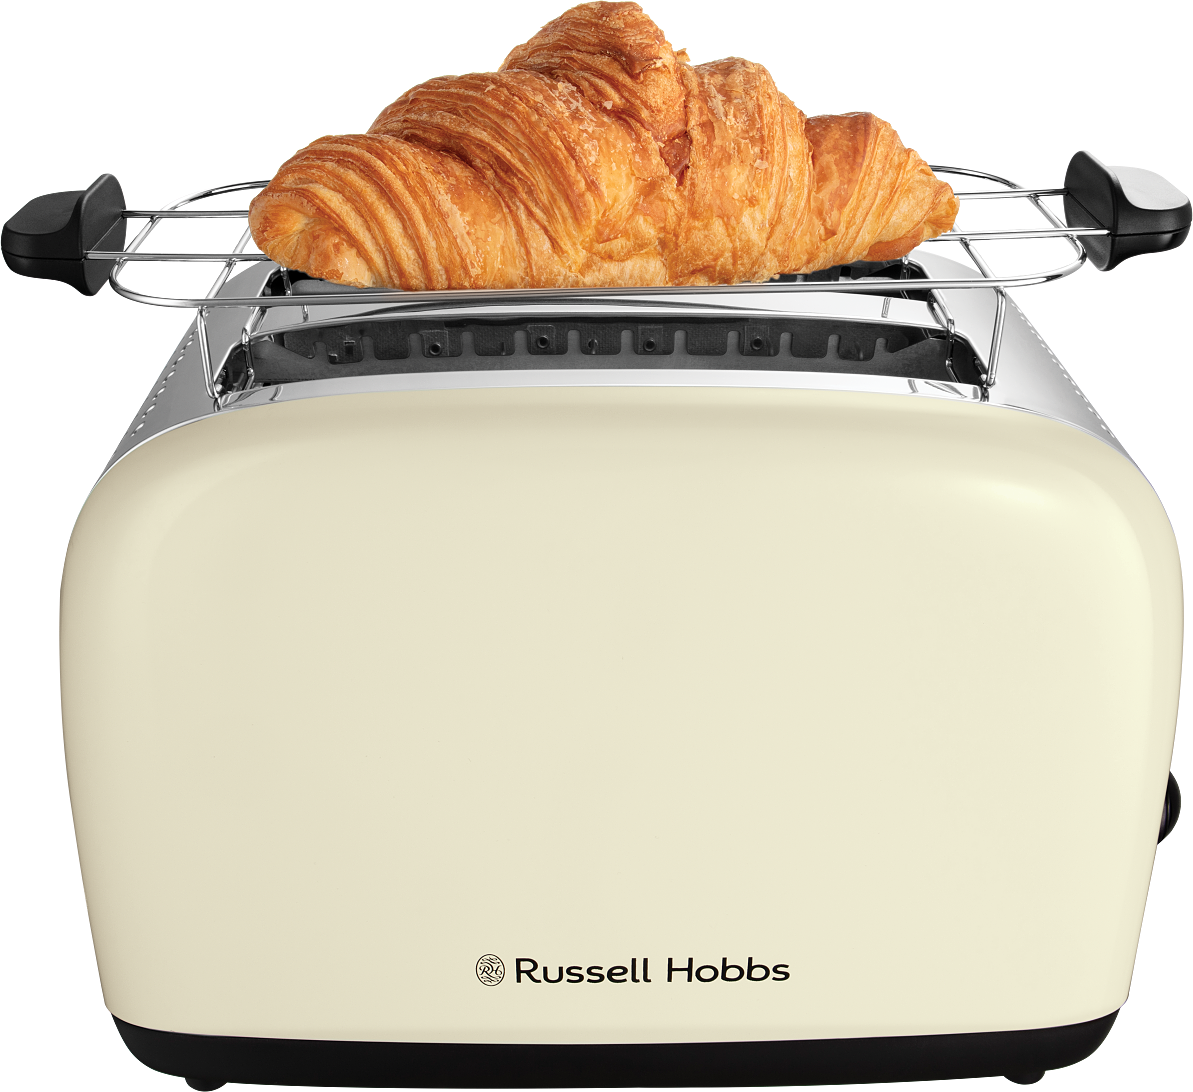 Russell Hobbs_Colours Plus Toaster_Classic Cream_59,99 Euro (3)